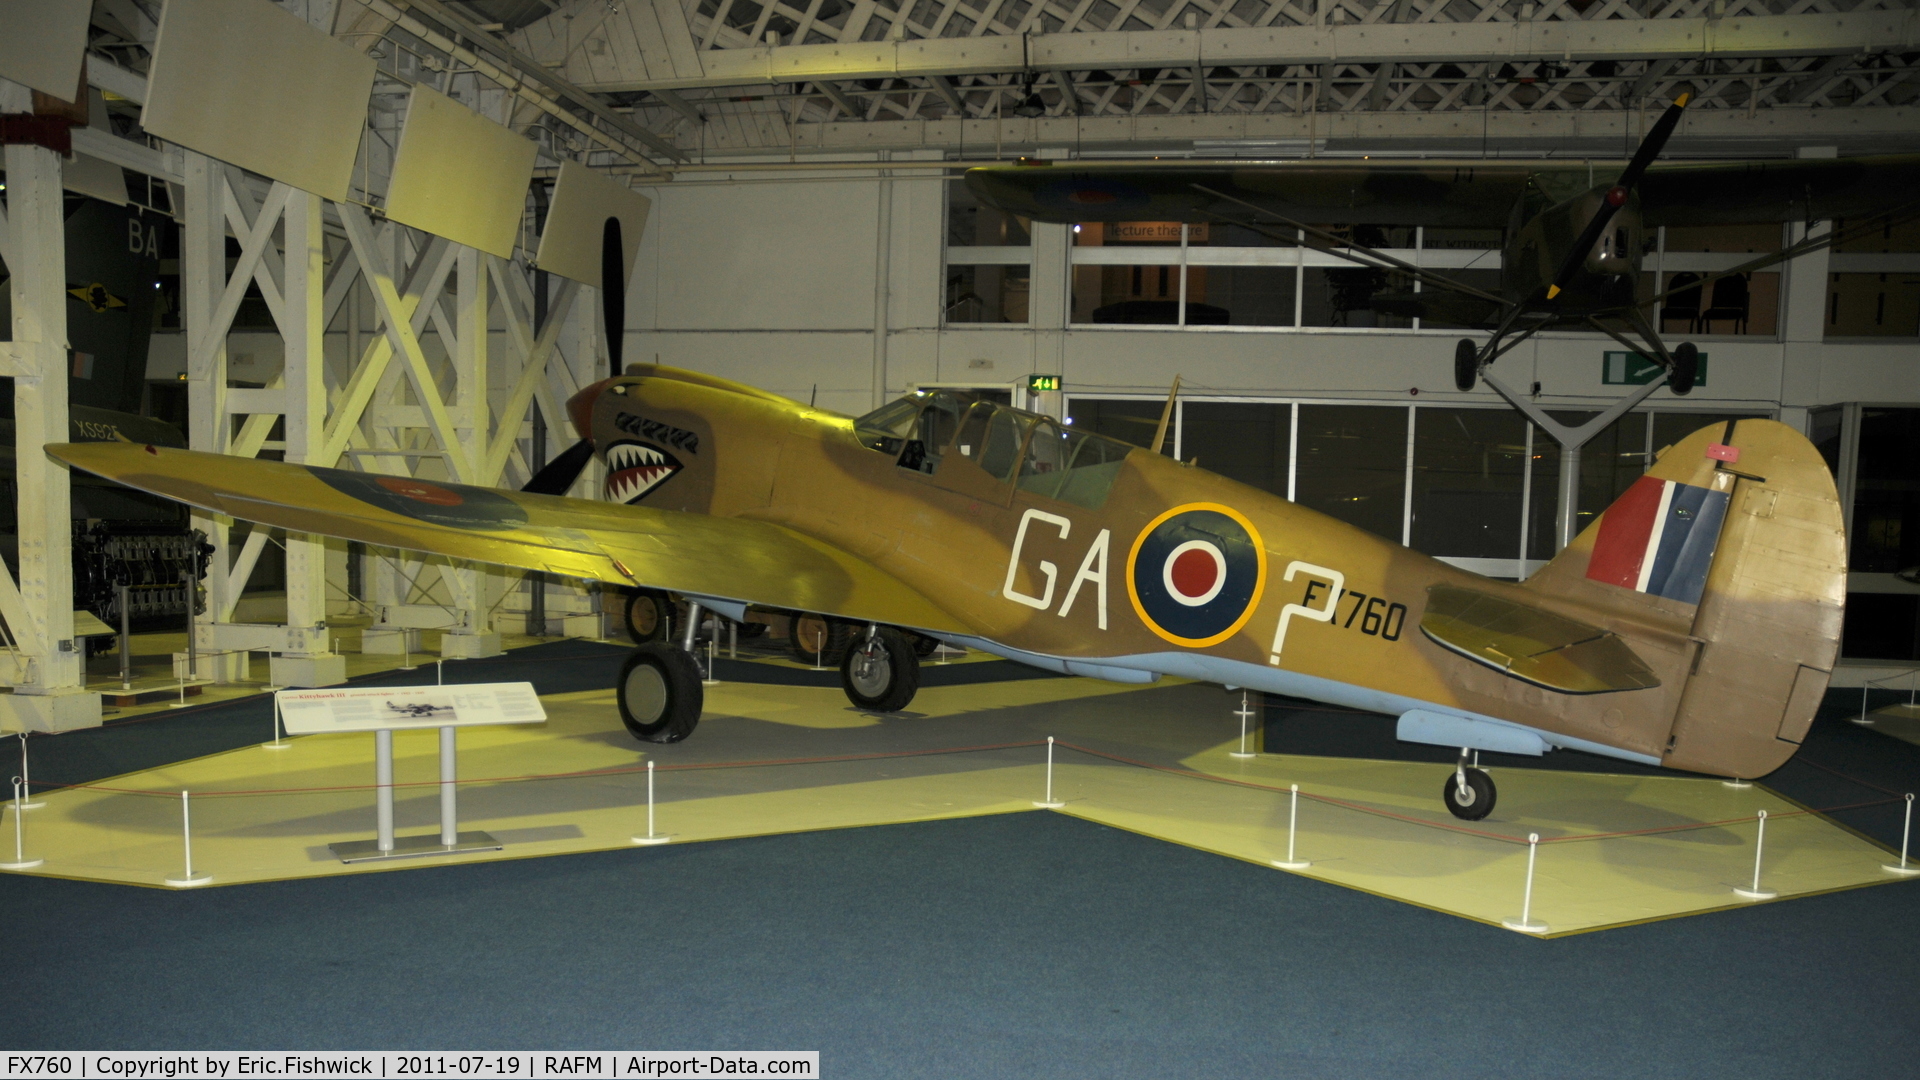 FX760, Curtiss Kittyhawk IV C/N 33840, FX760 at the RAF Museum, Hendon, London.